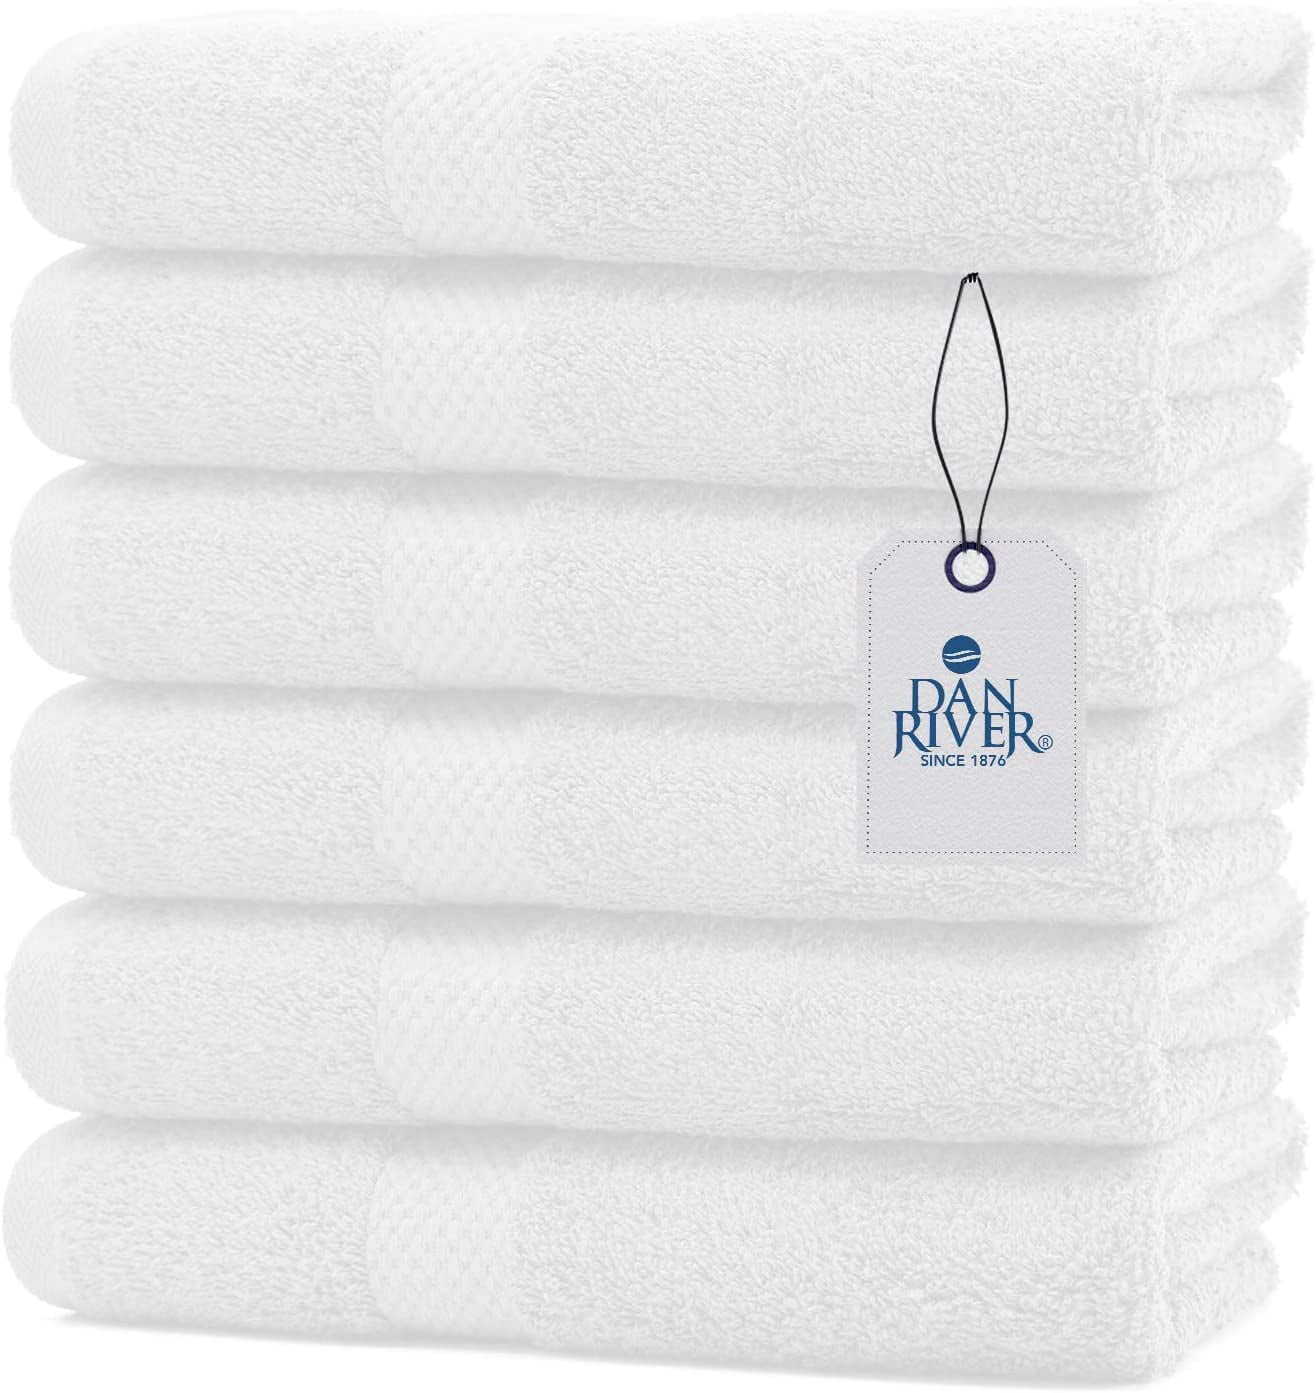 Grandeur 100% Cotton Hospitality Bath Towels, 6 Pack – Xtra